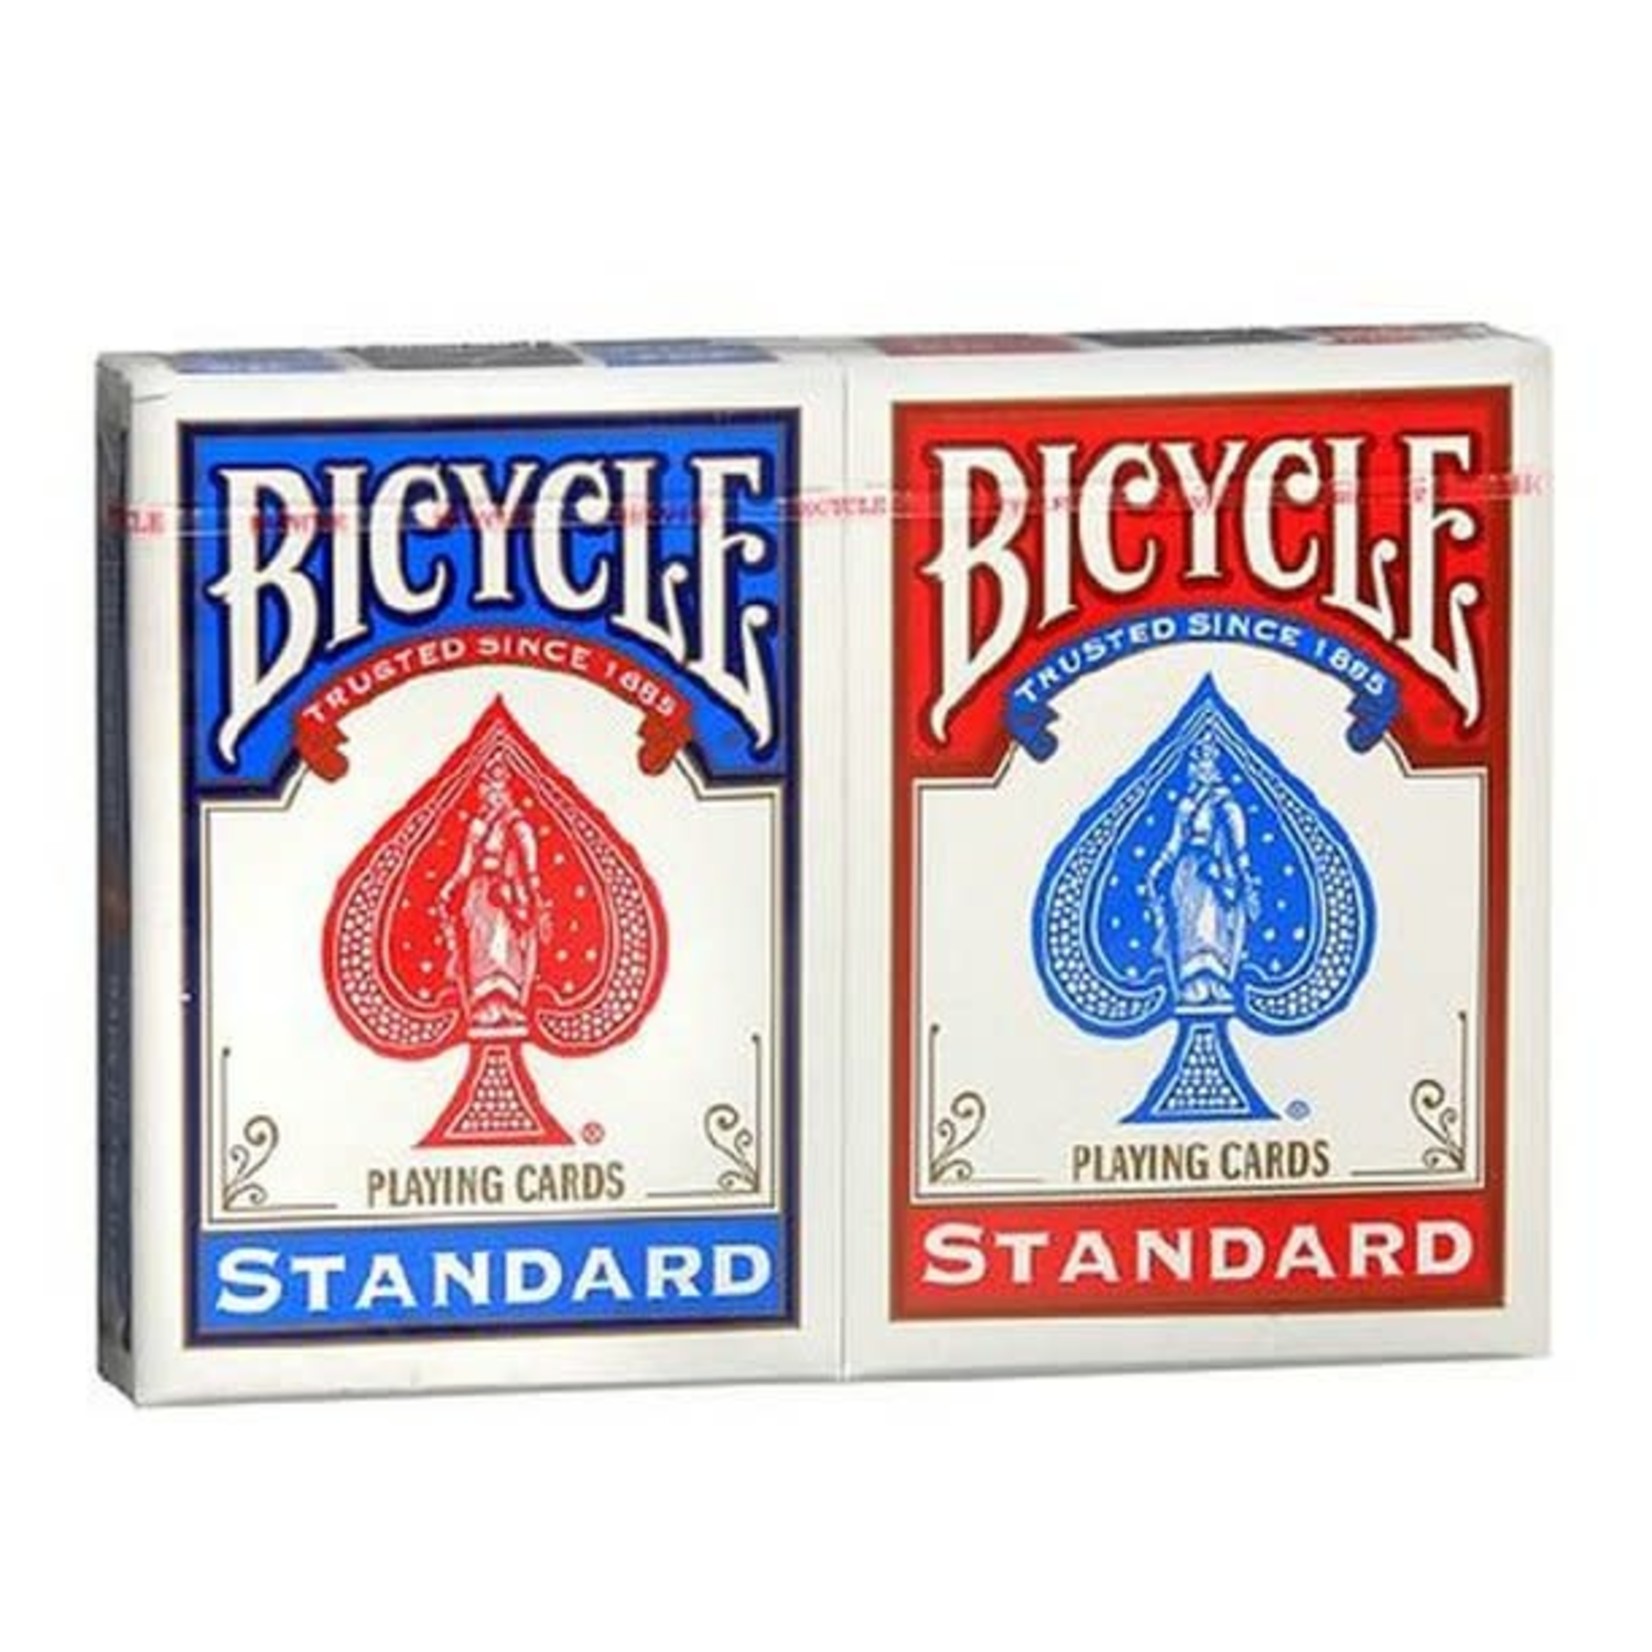 Bicycle Bicycle Standard Index